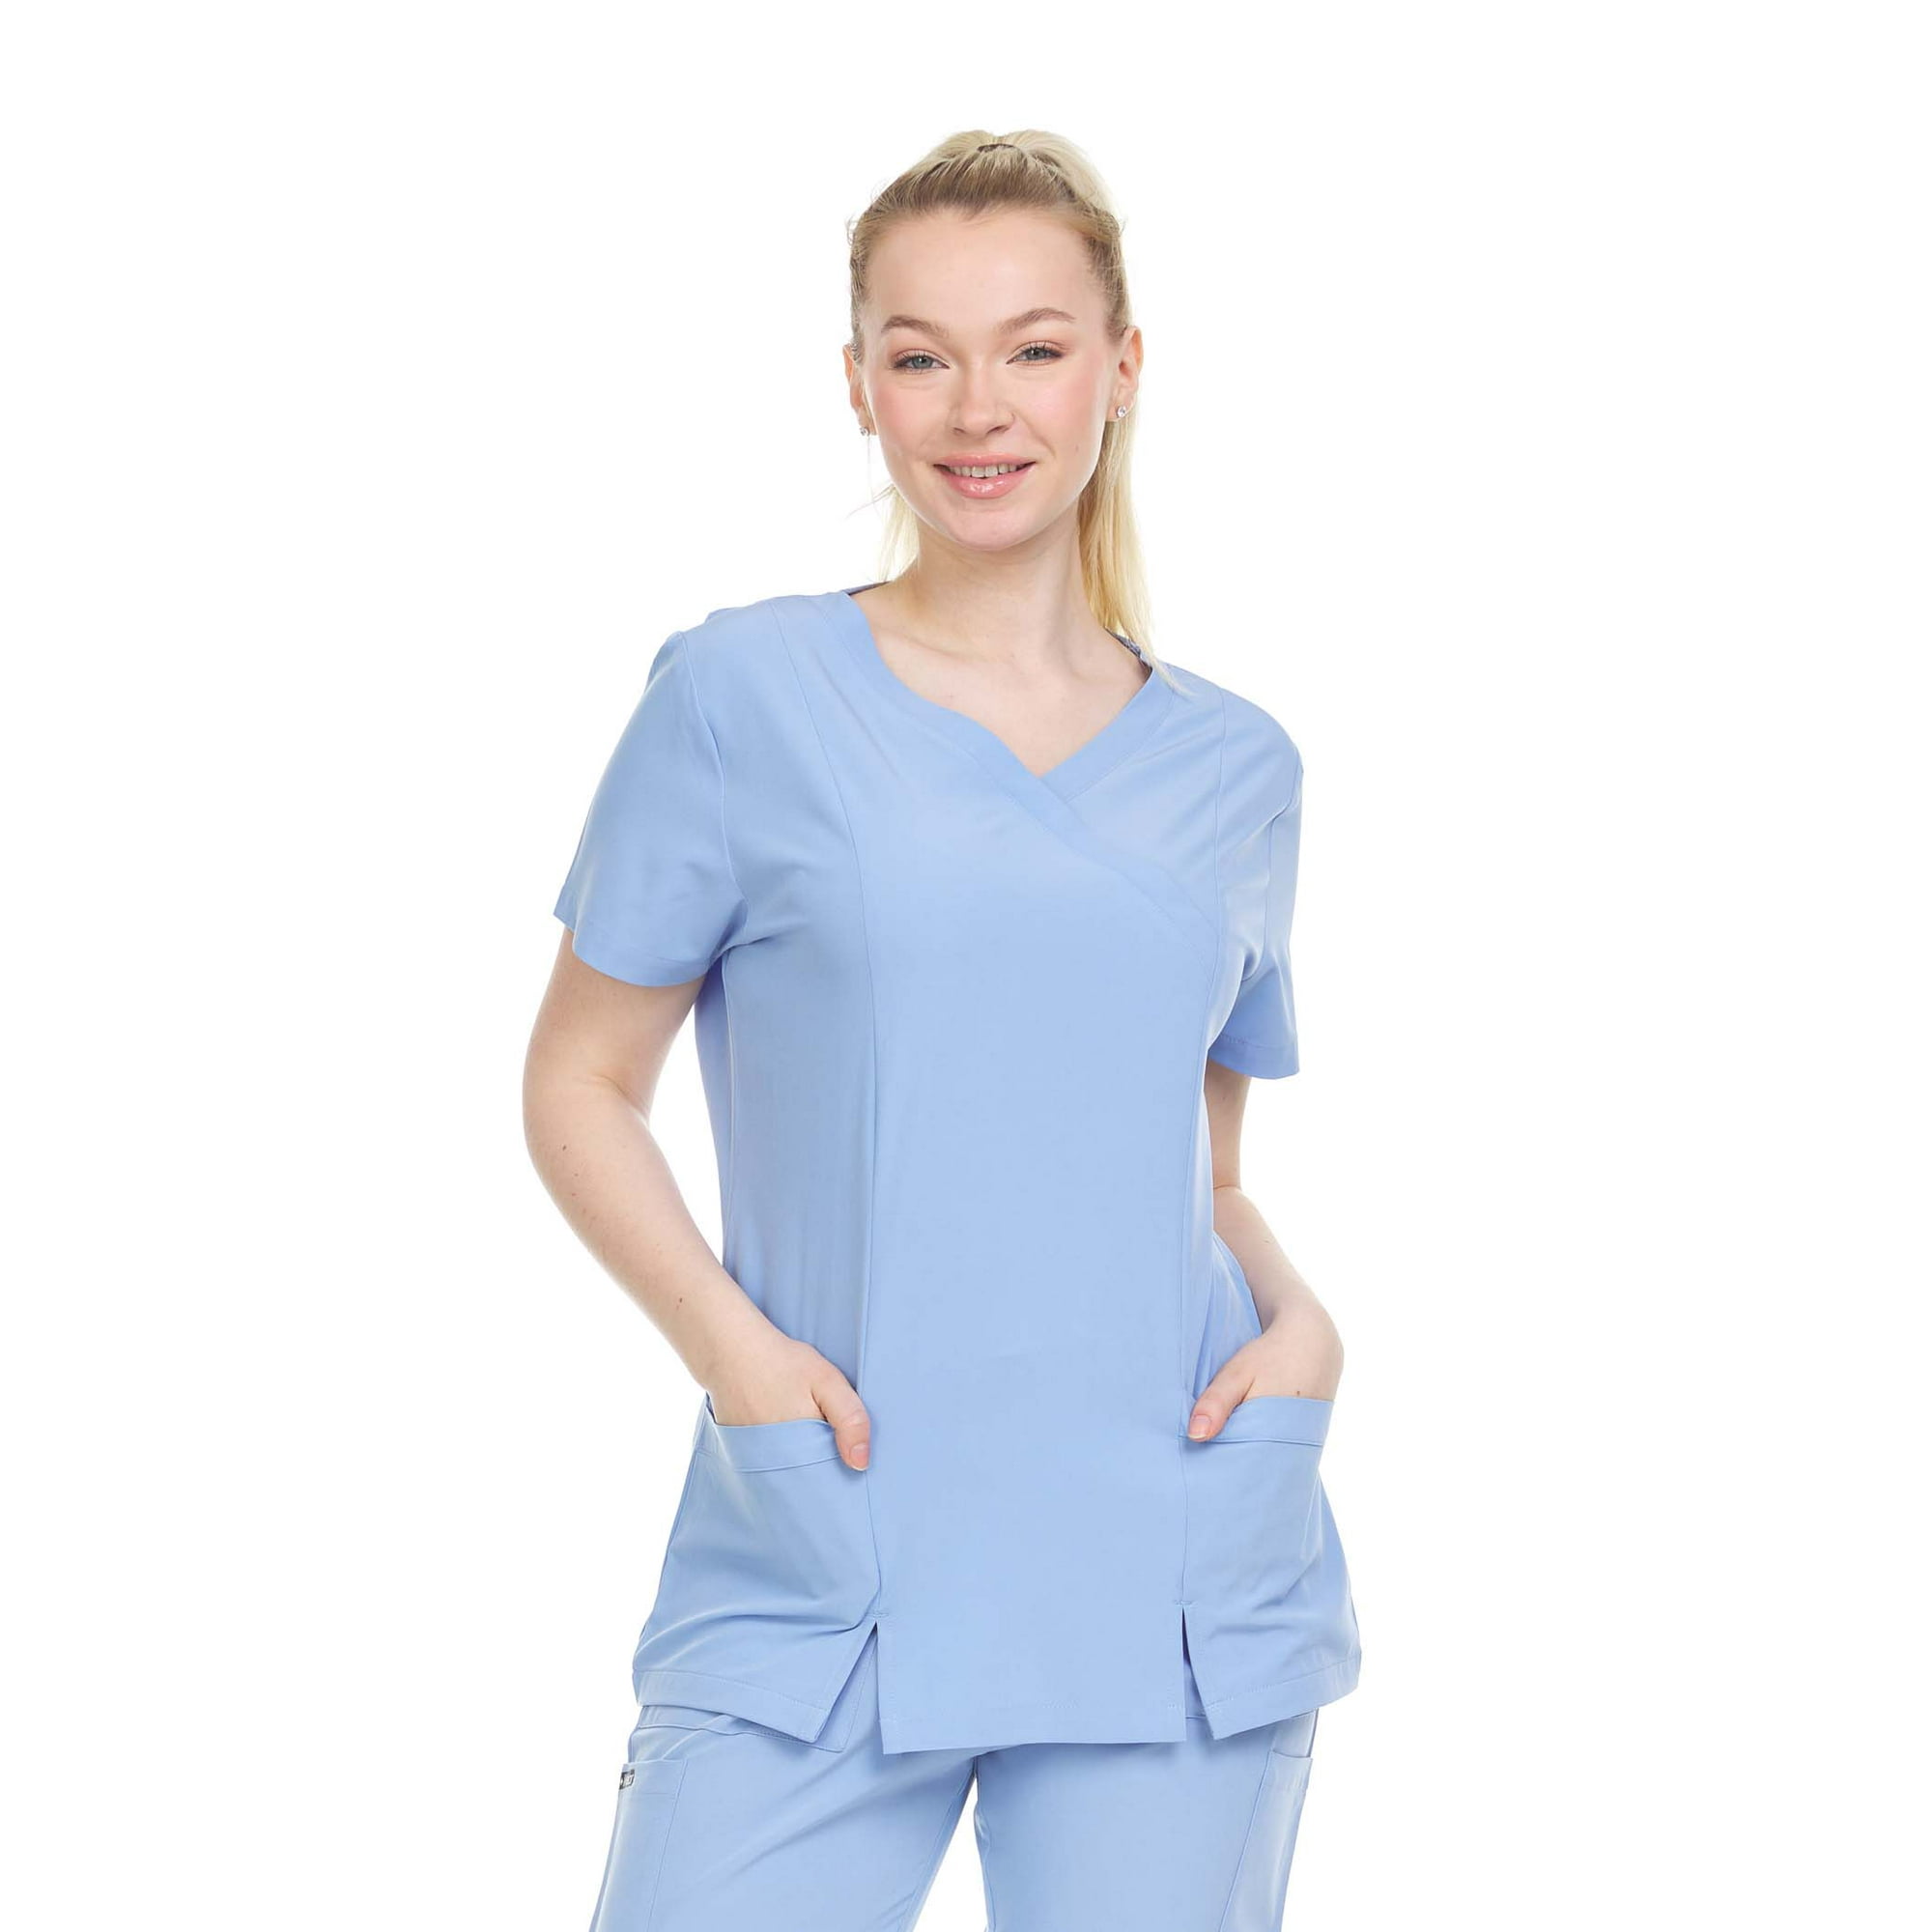 DDT005 Women Scrubs Top V-Neck with Pockets Regular fit - Stylish Medical  Scrub Tops for Women Blue Size XL 